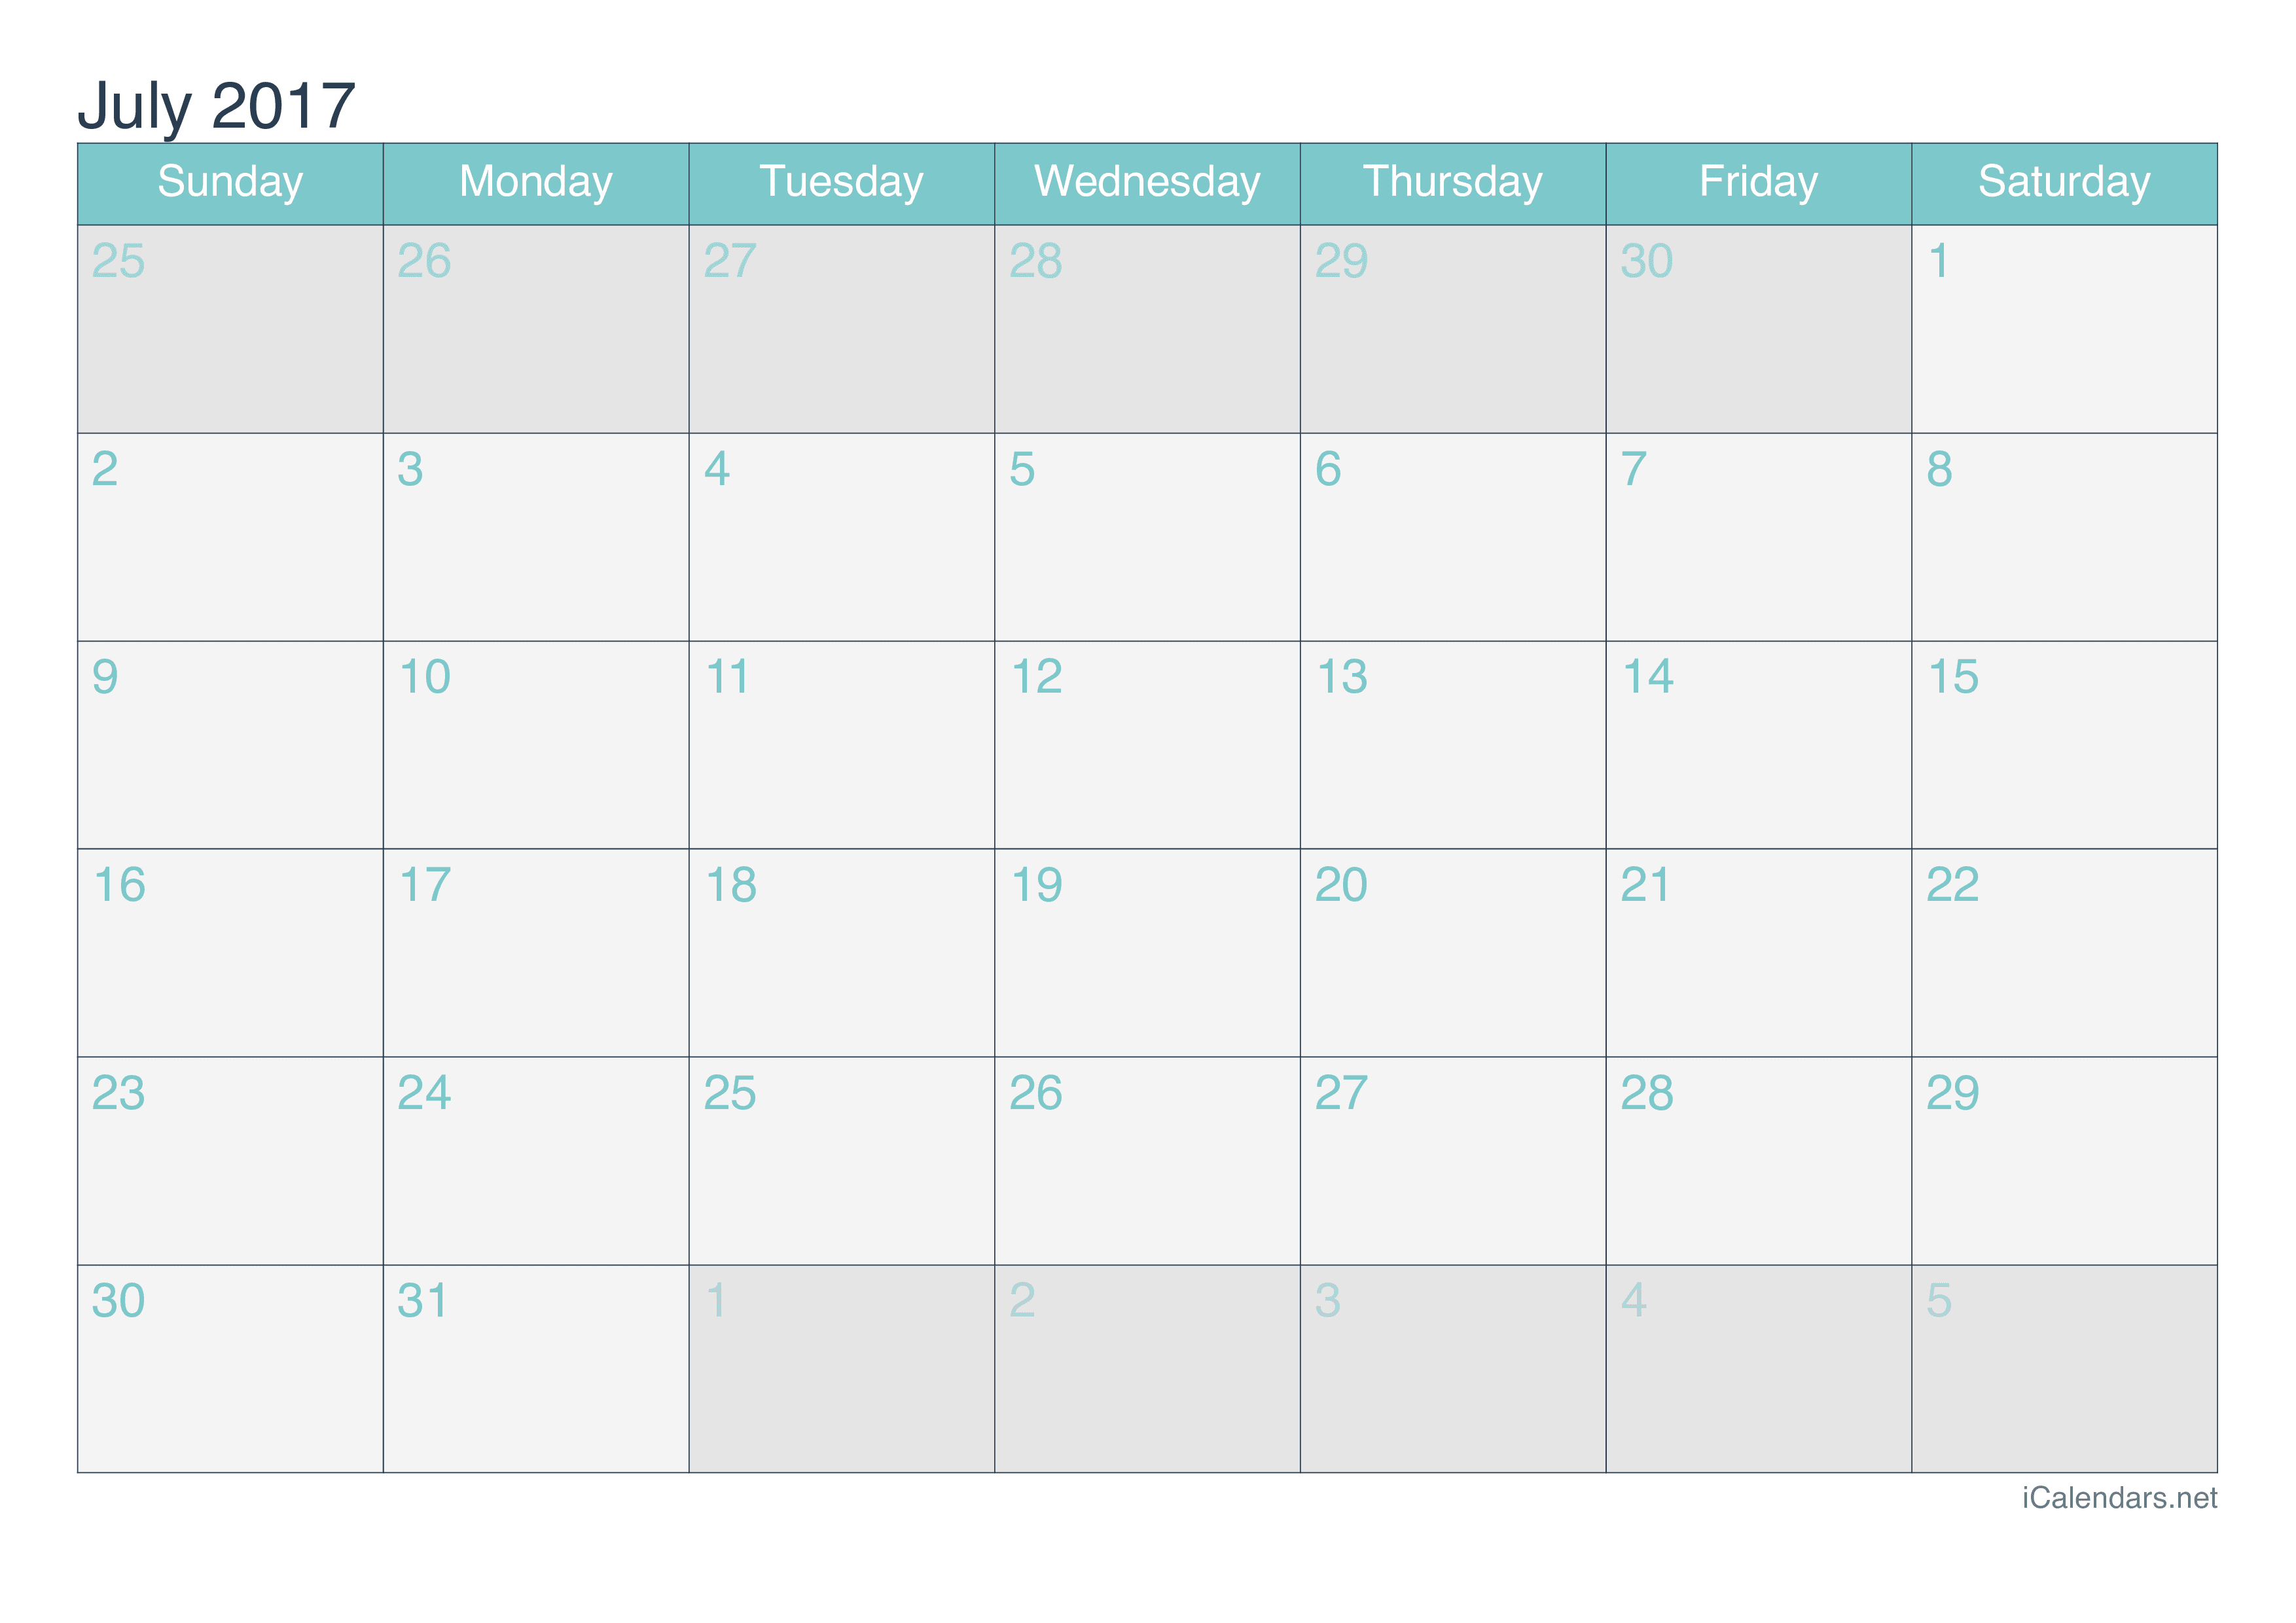 july-2017-calendar-wikidates